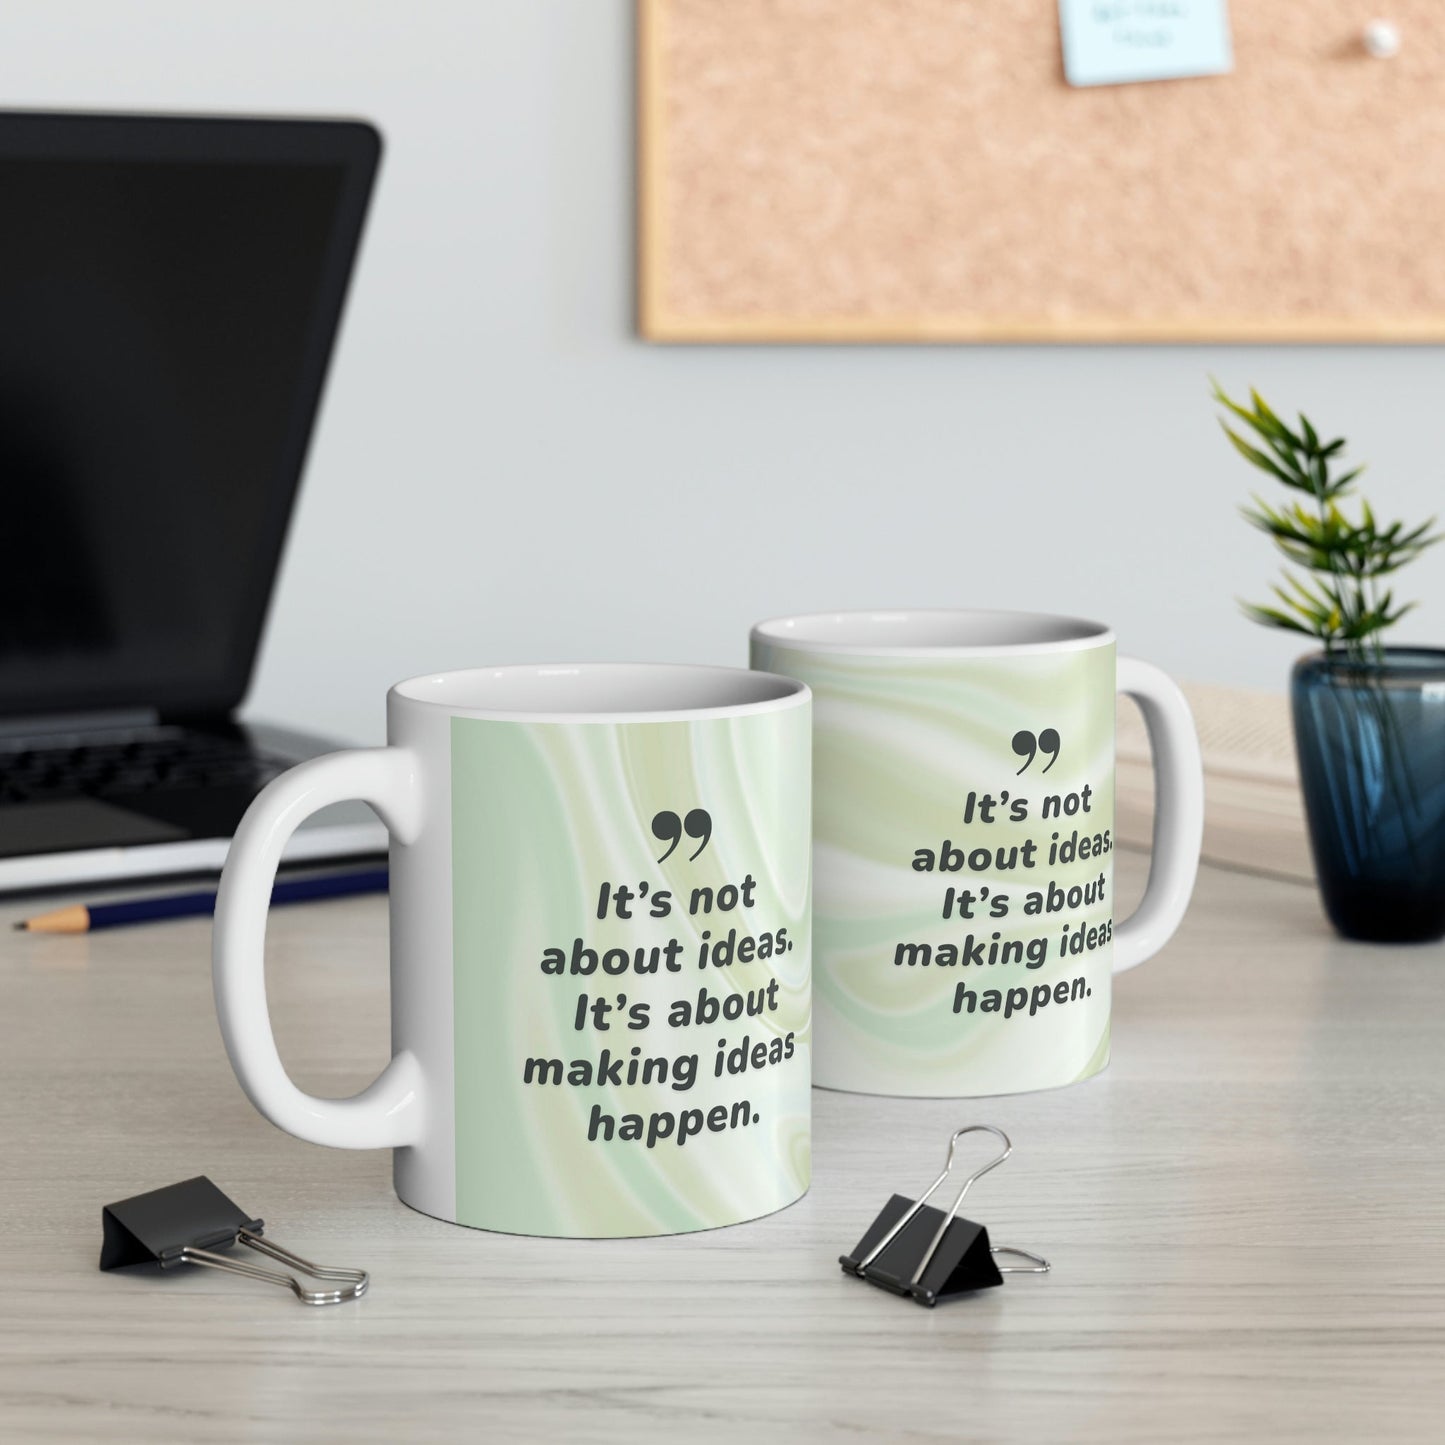 Making Idea's Happen Coffee Tea Mug